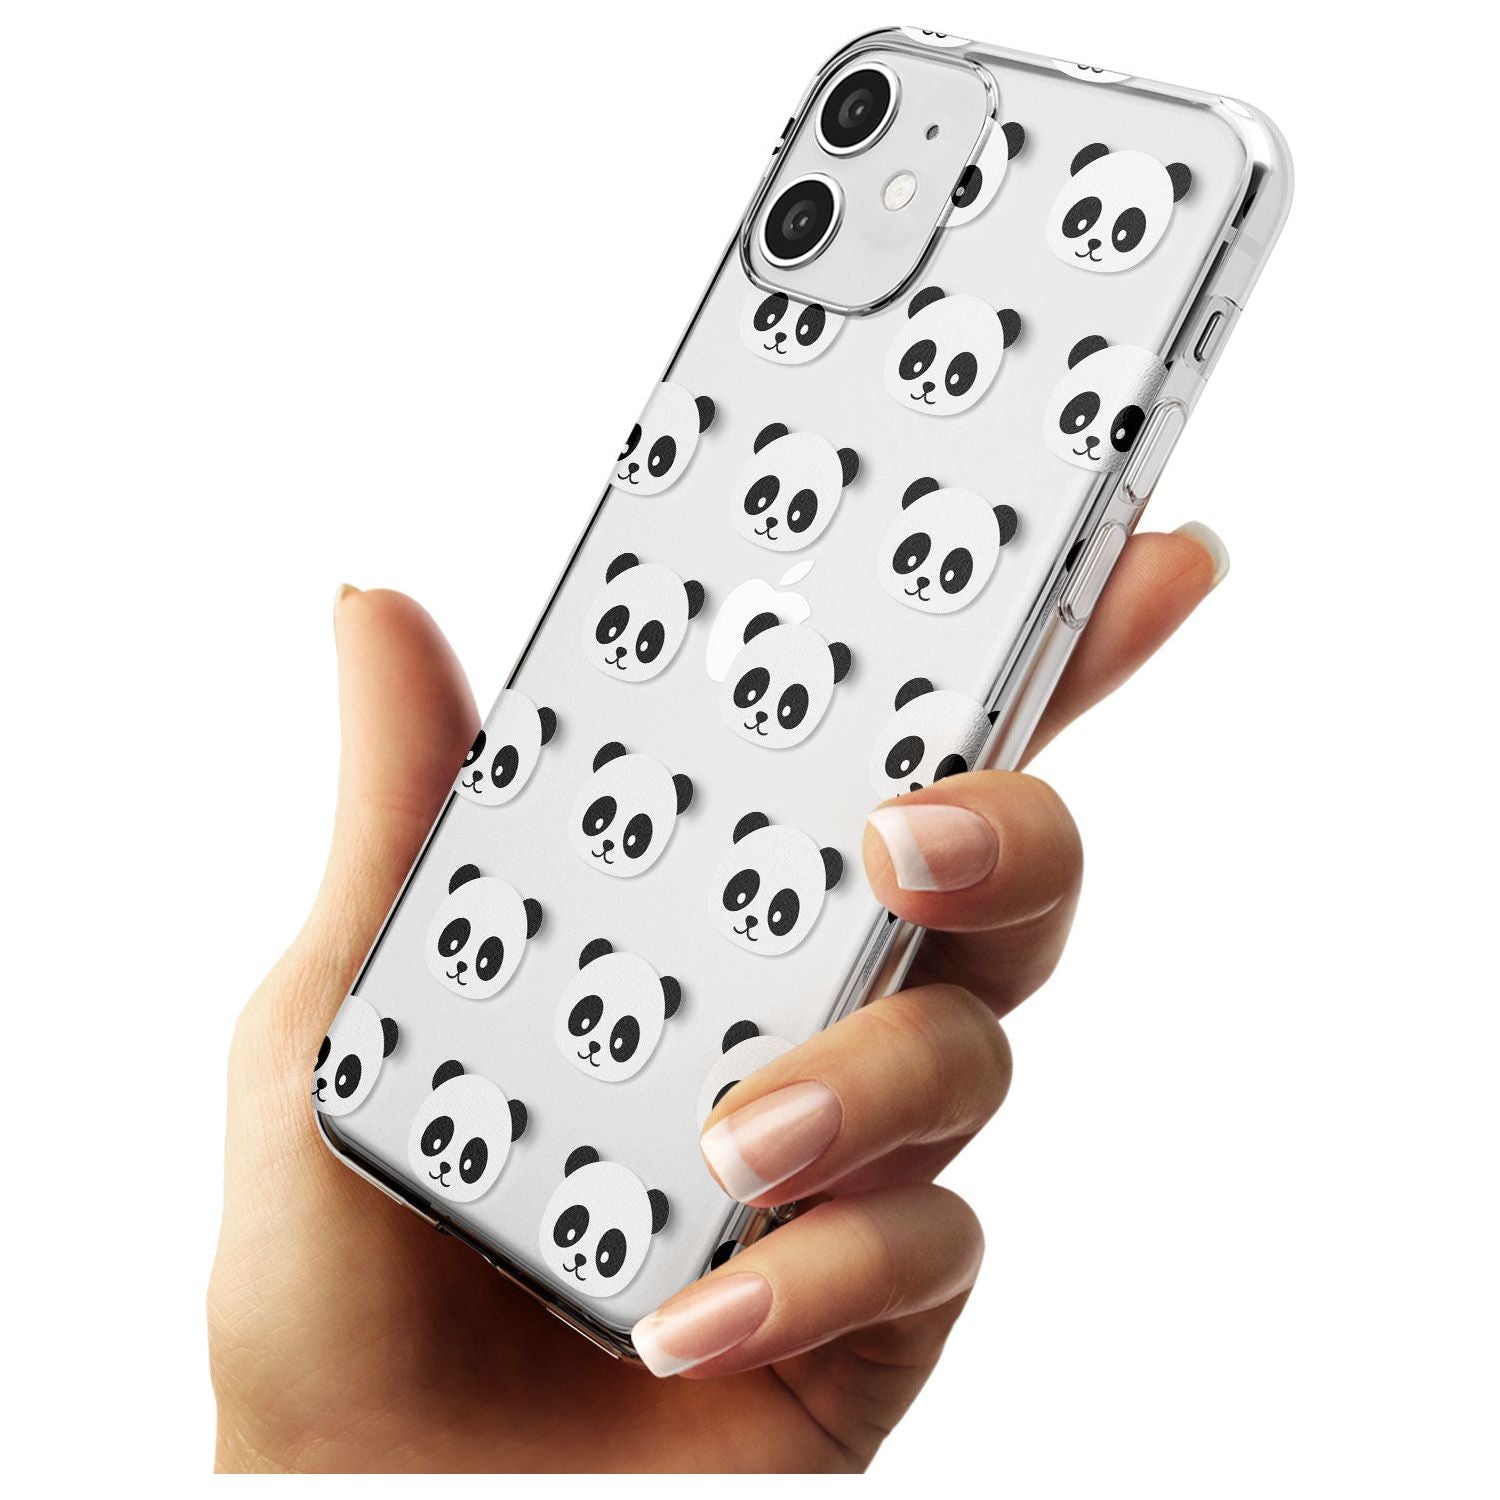 Panda Face Pattern Black Impact Phone Case for iPhone 11